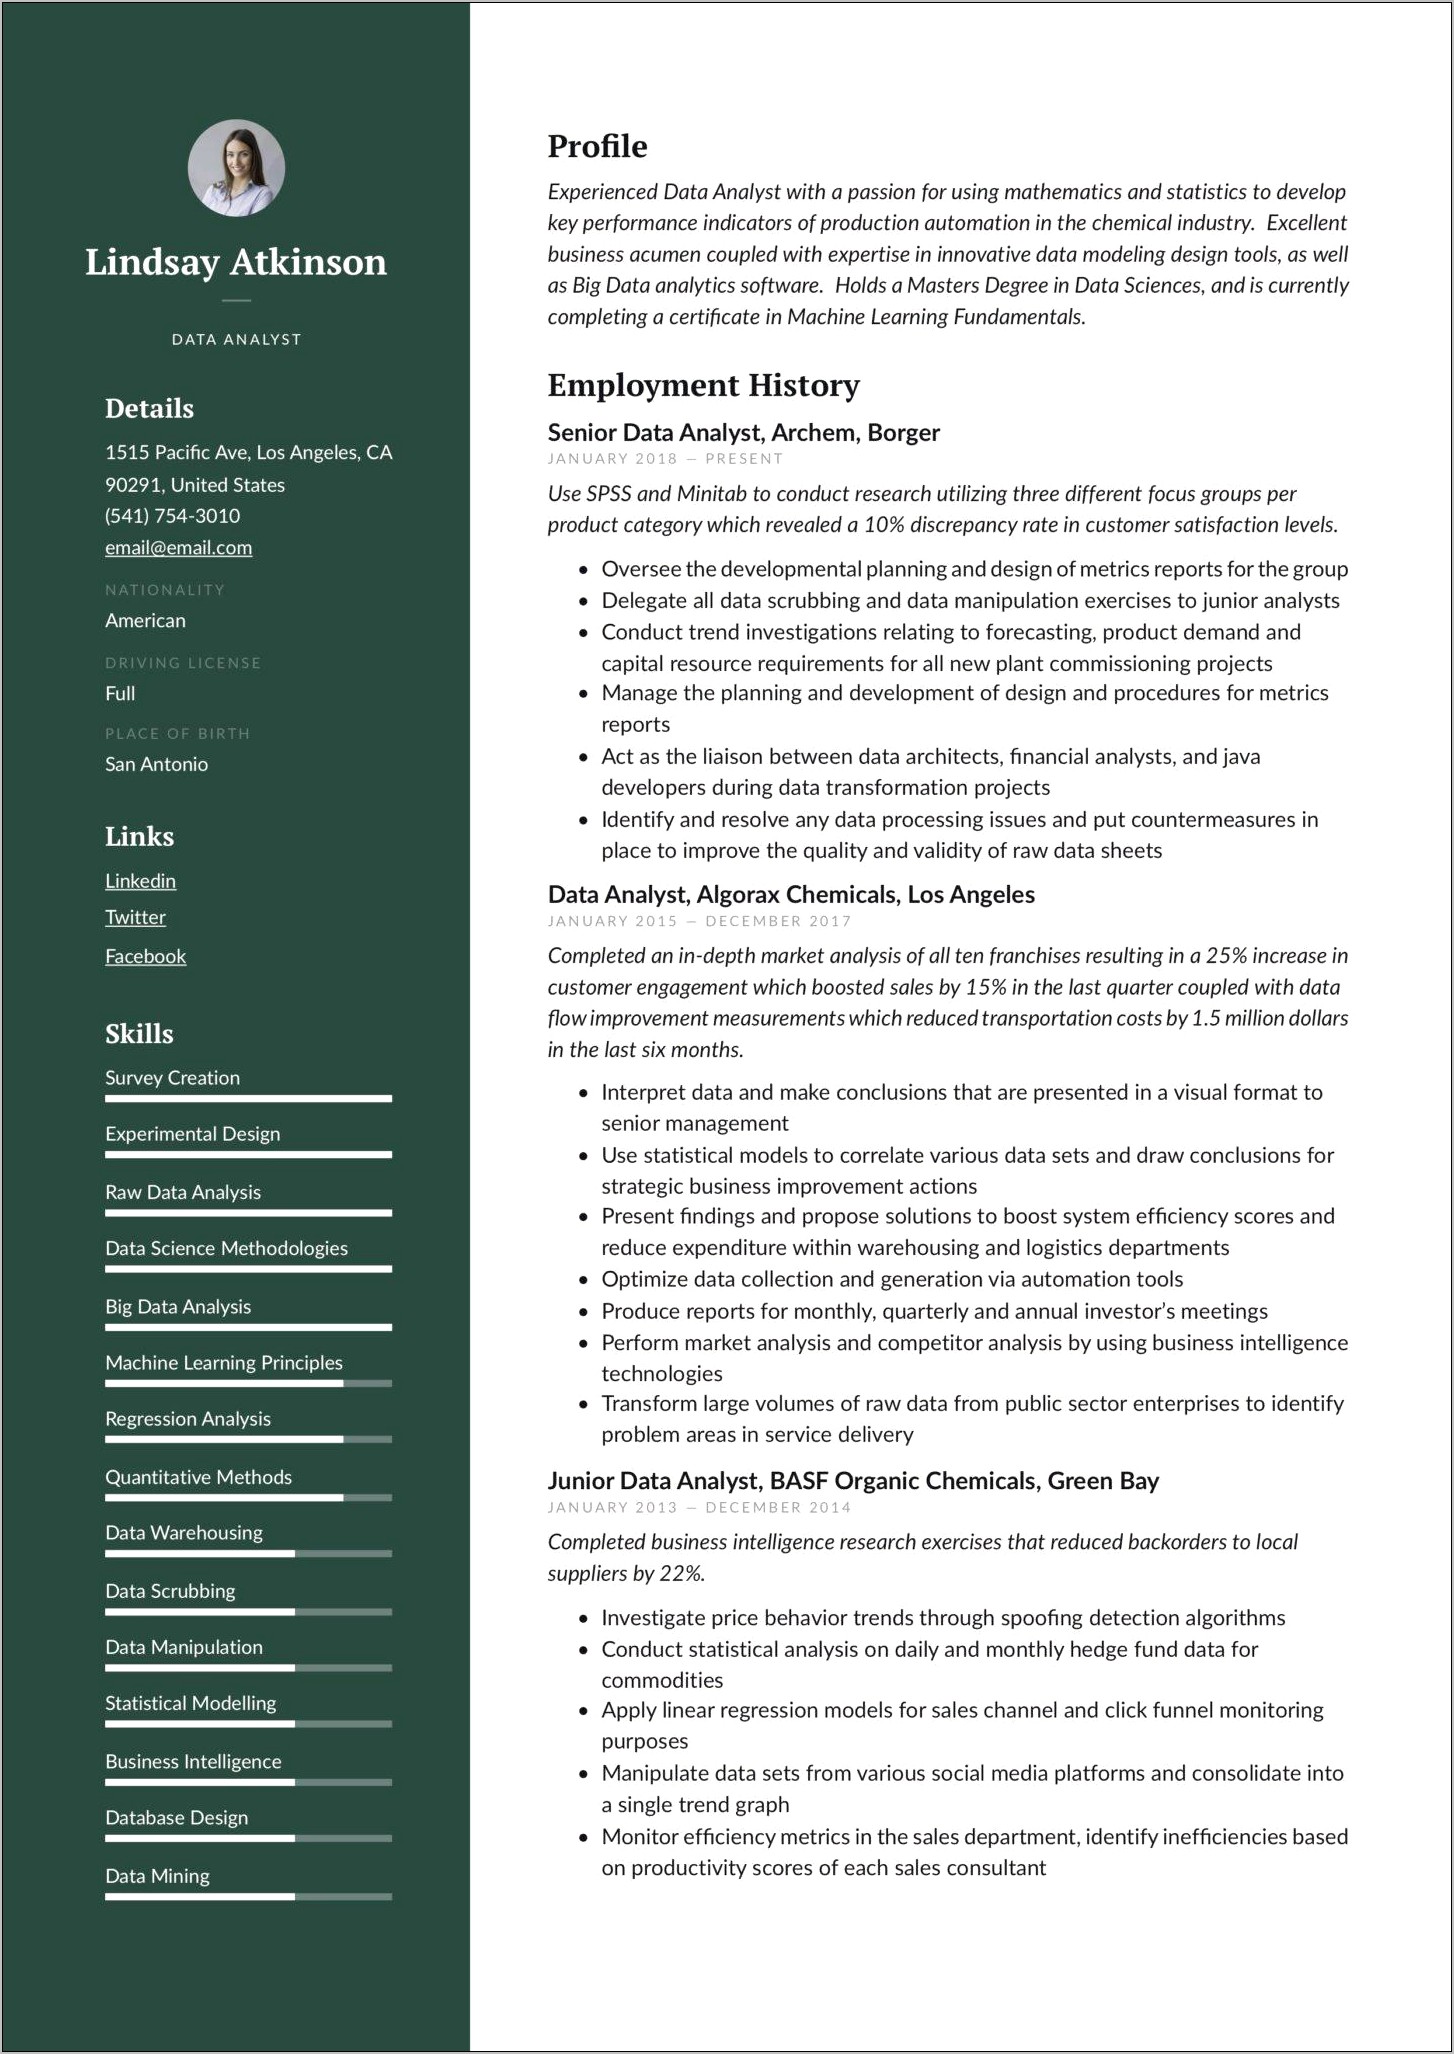 Sample Resume Of Business Intelligence Analyst